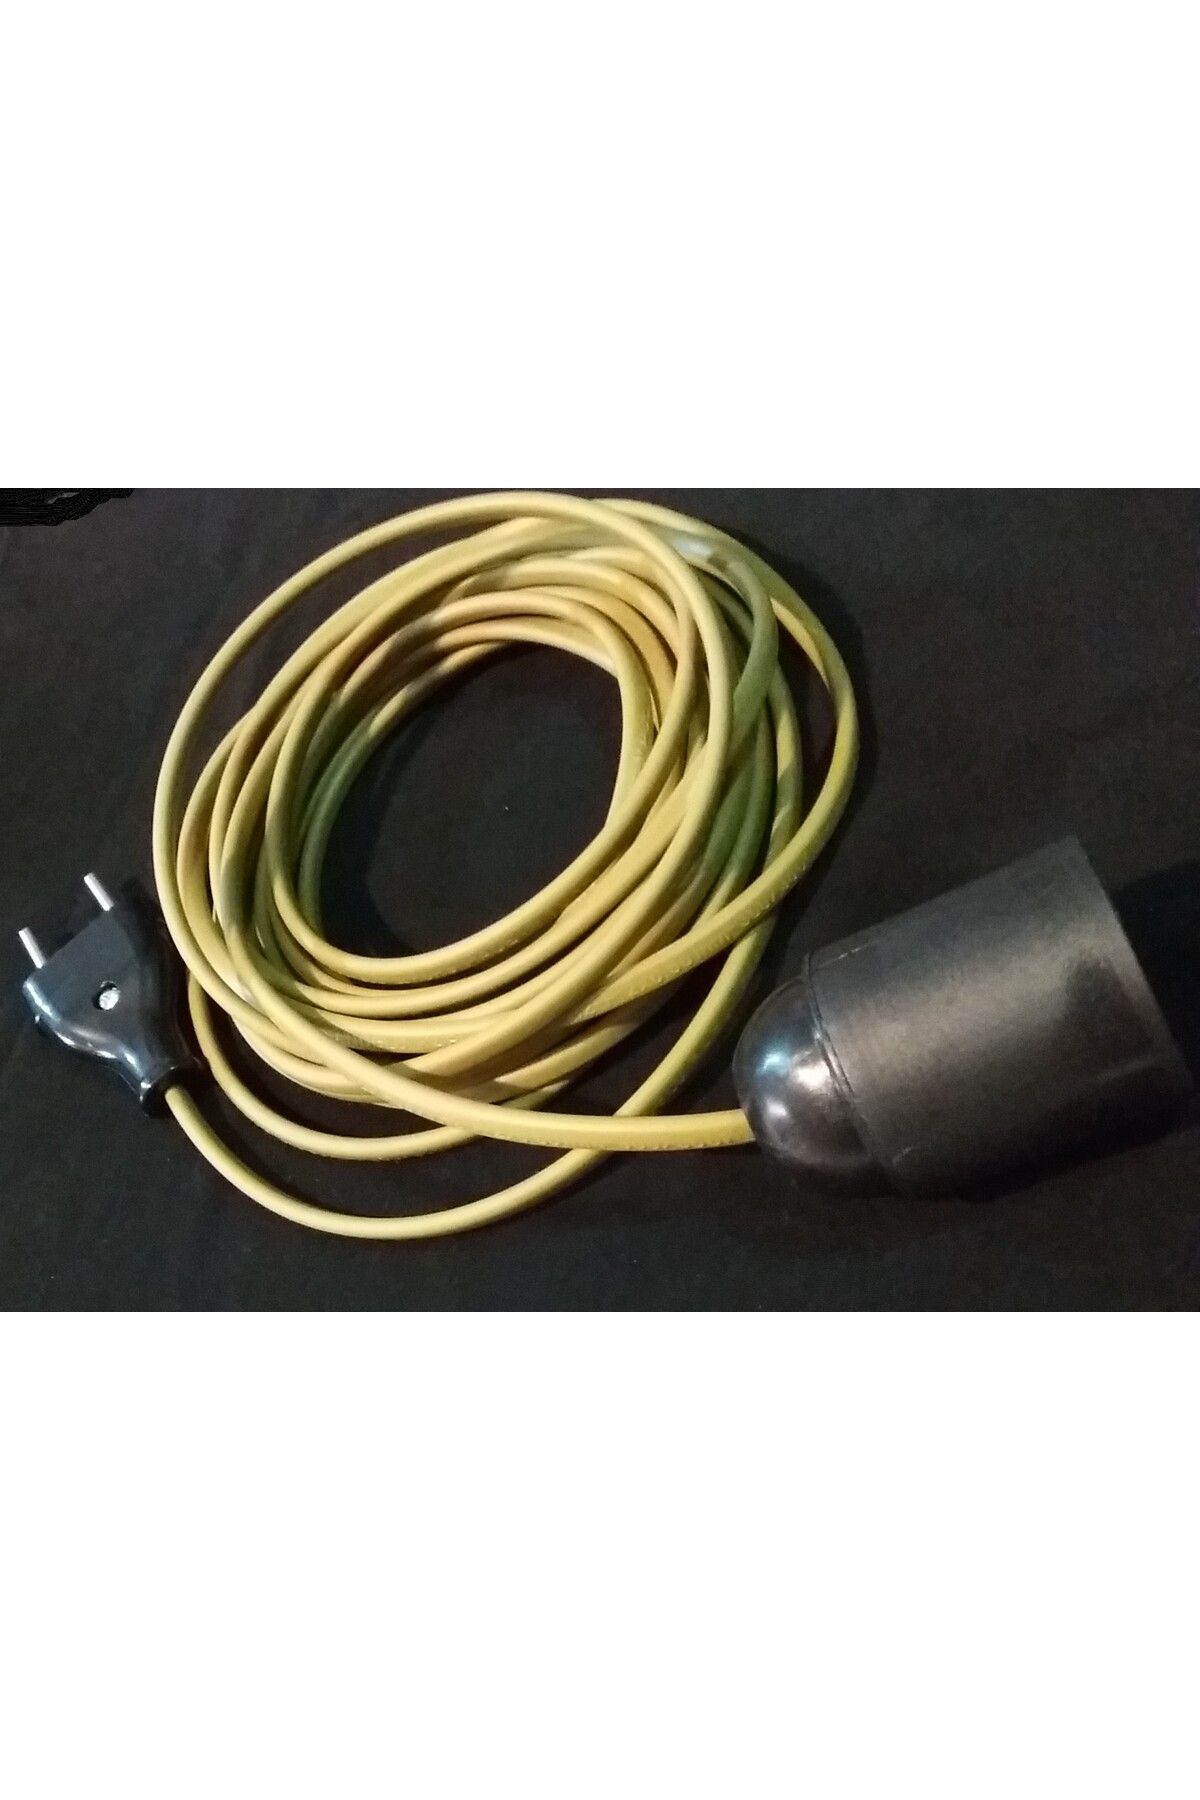 Elektrikçim 10 metre, yeşil siyah lamba uzatma kablosu